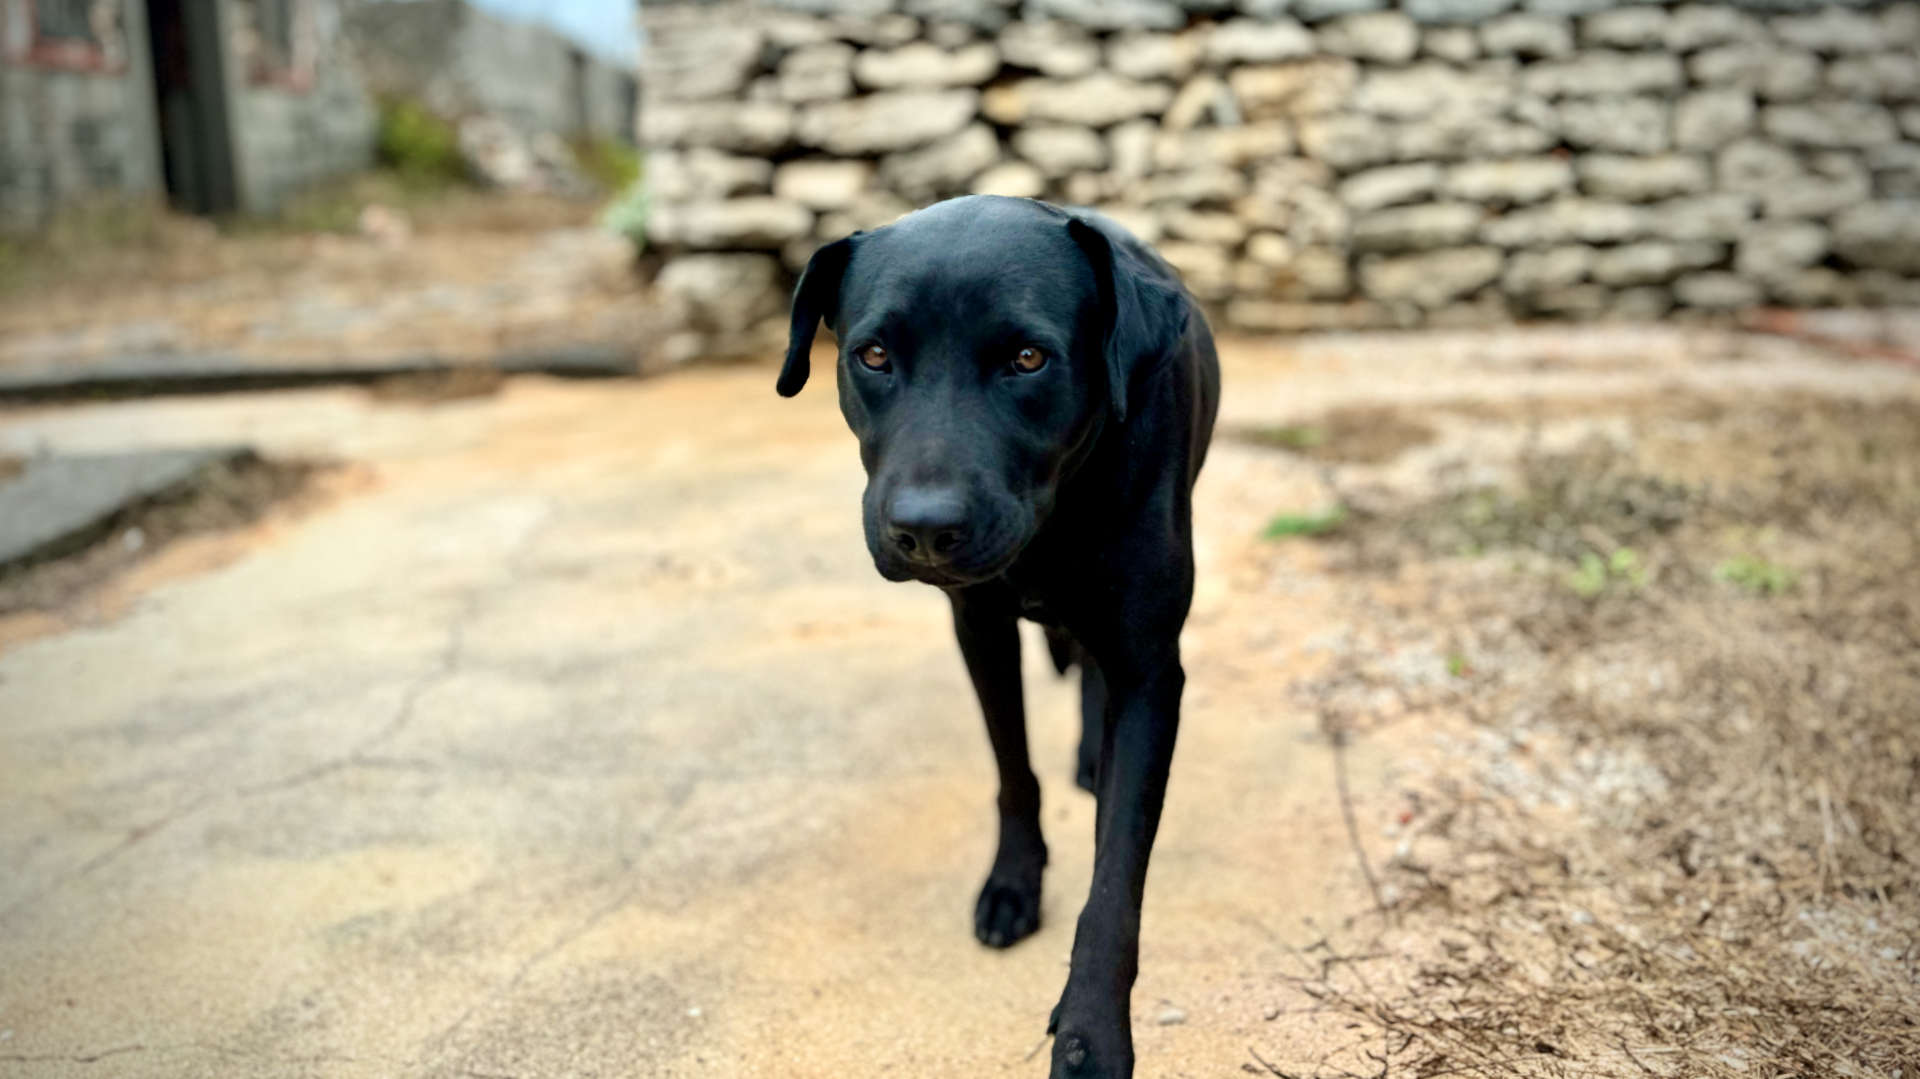 A large black dog looking at the camera.